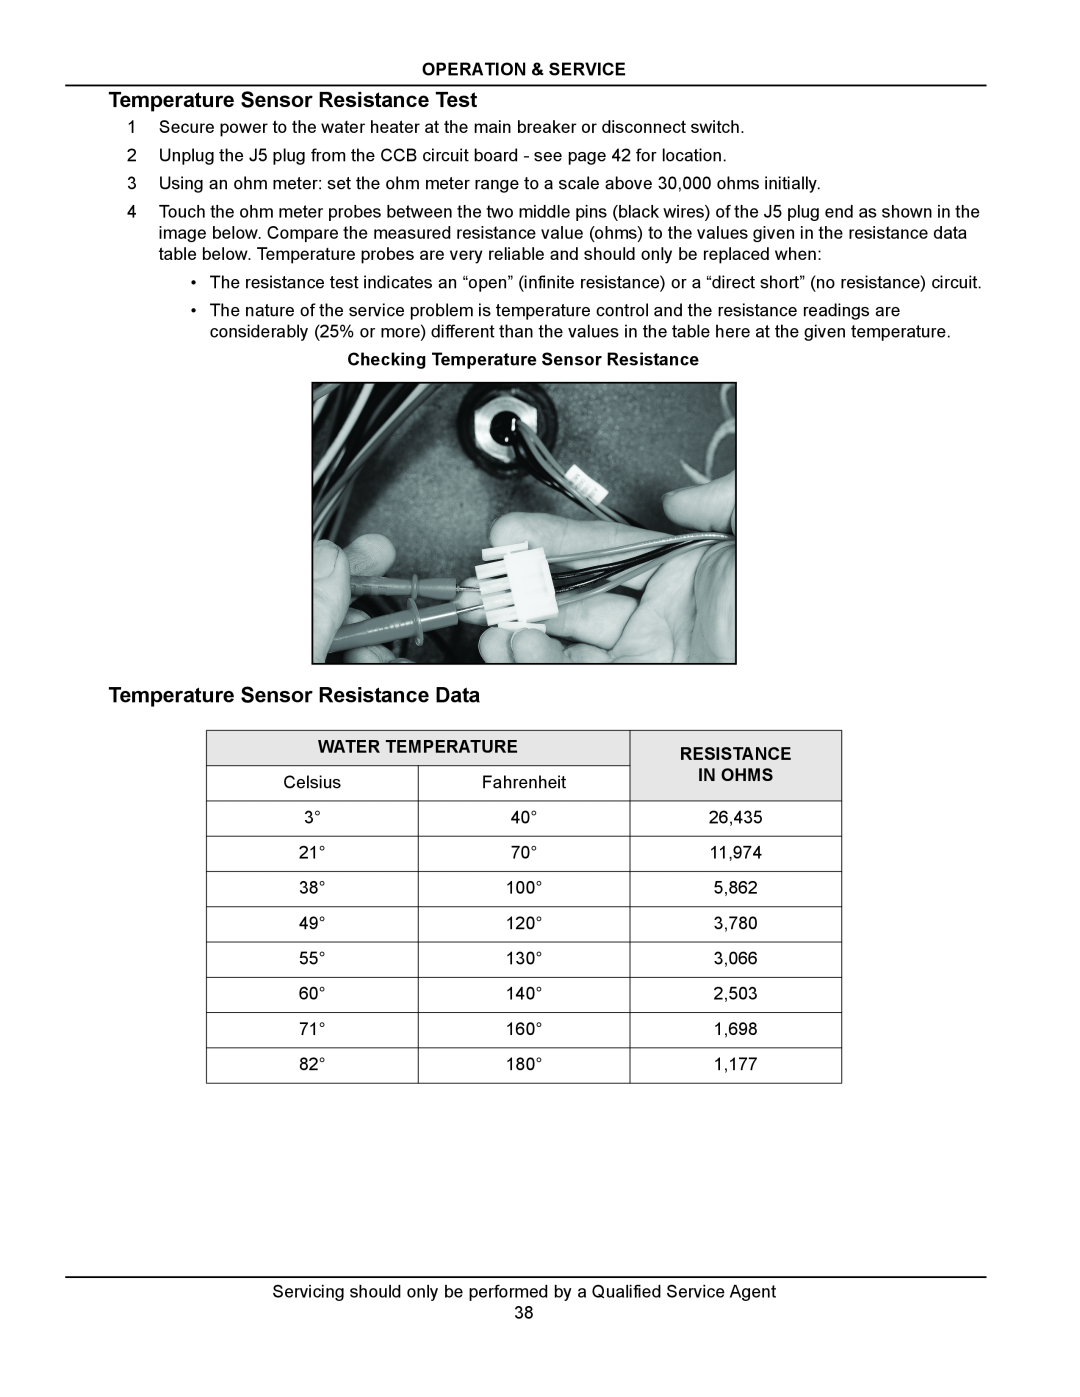 American Water Heater ITCE3-52/80/119 Temperature Sensor Resistance Test, Temperature Sensor Resistance Data, In Ohms 